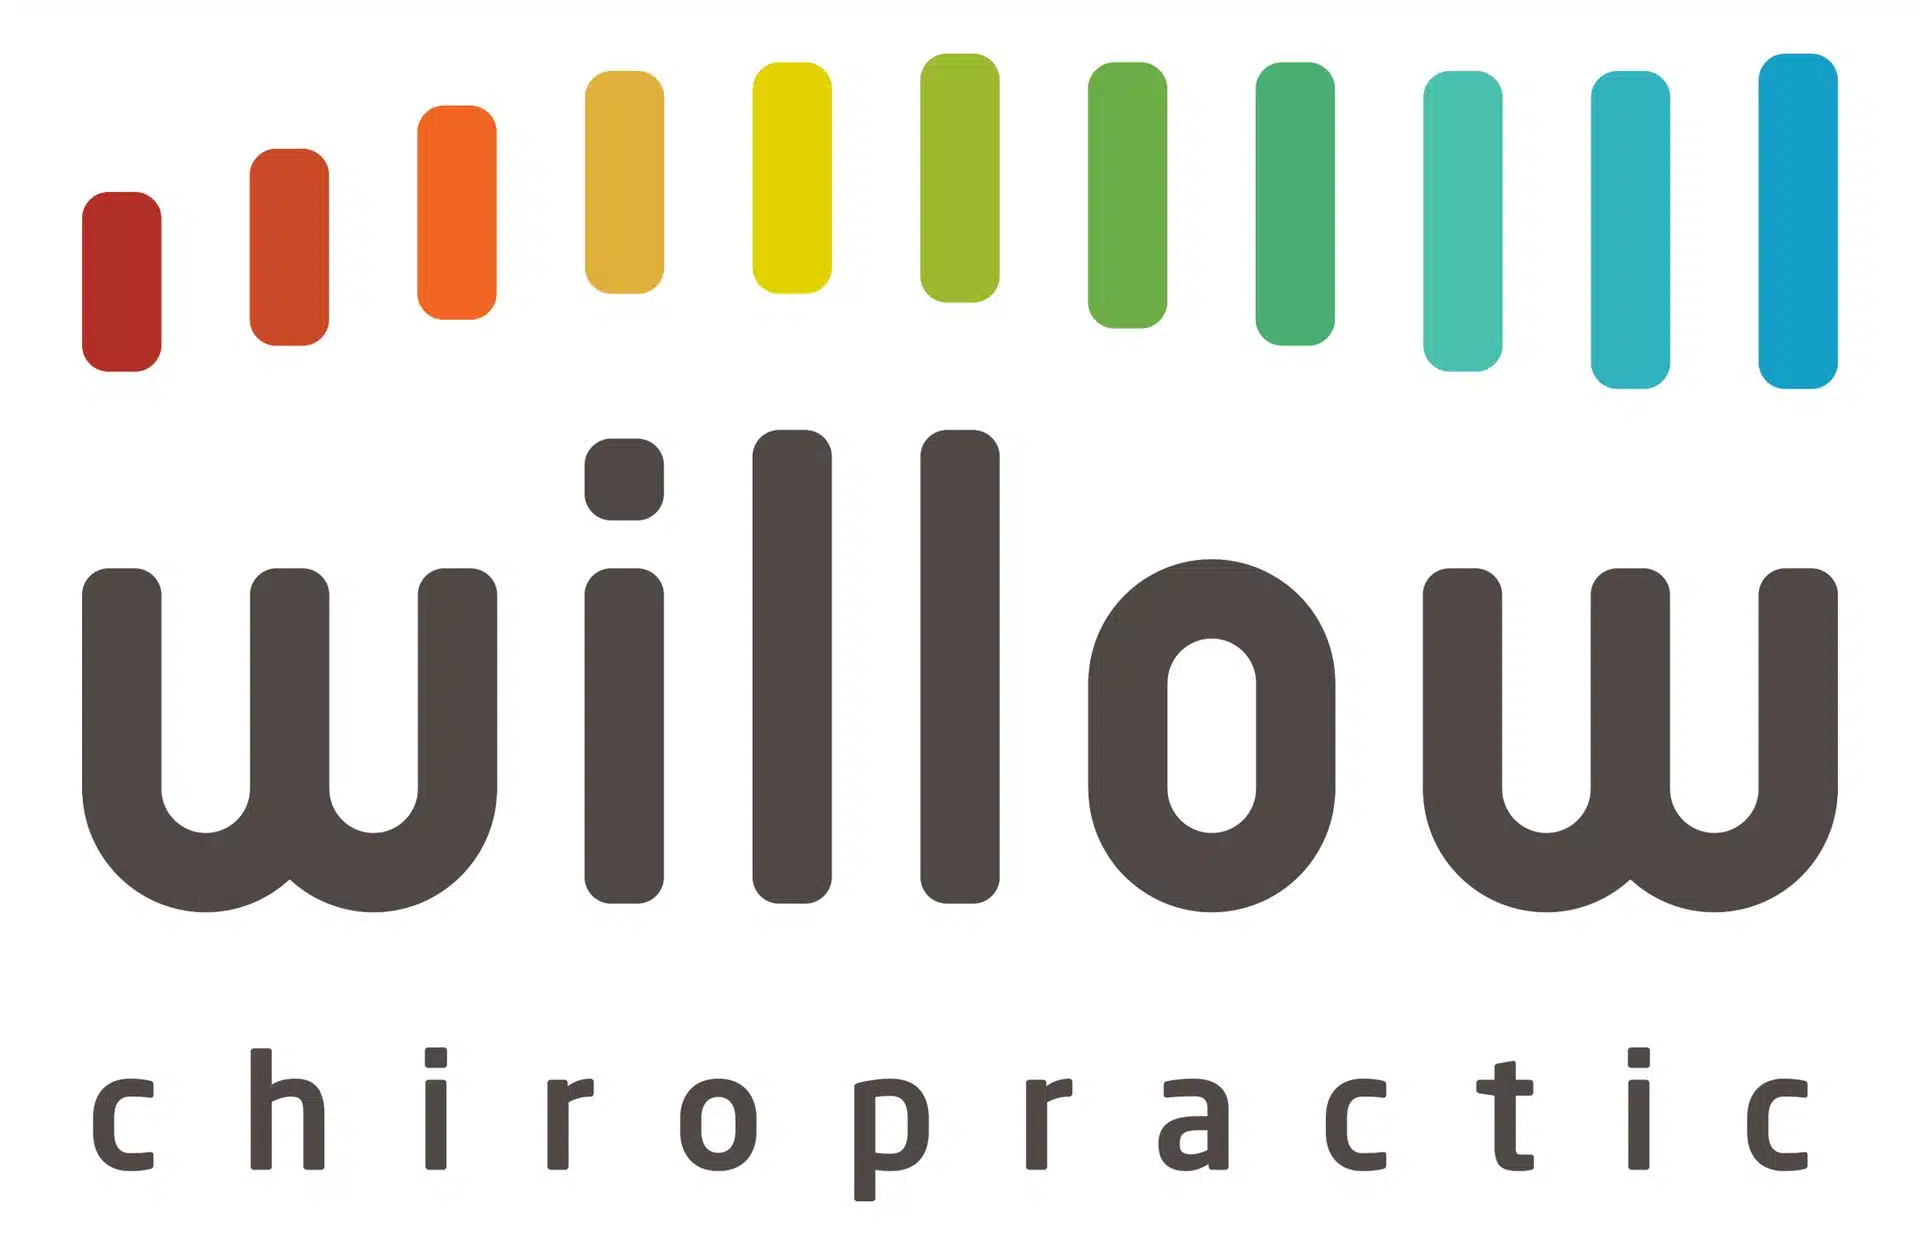 Willow Chiropractic logo